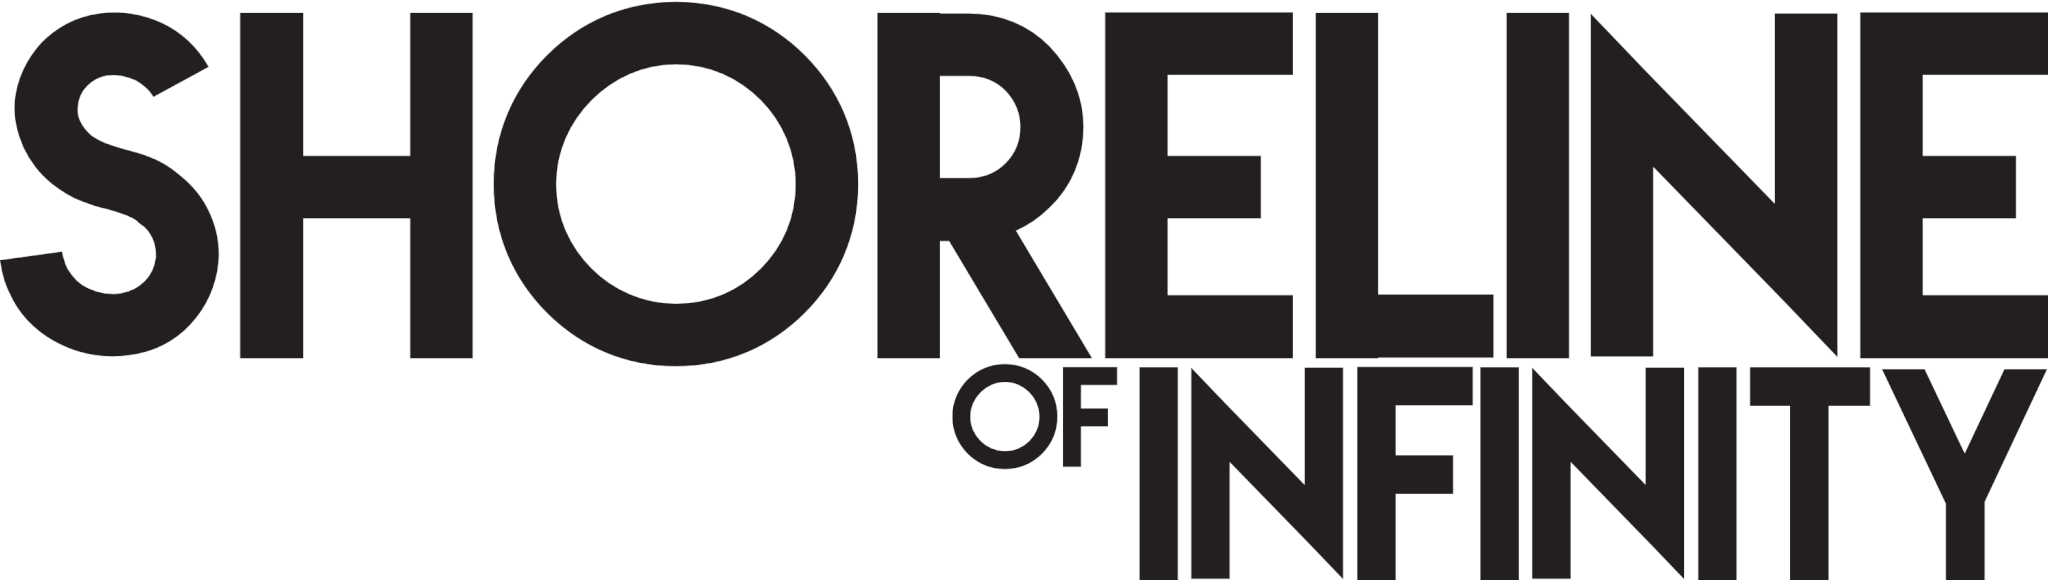 Shoreline of Infinity logo